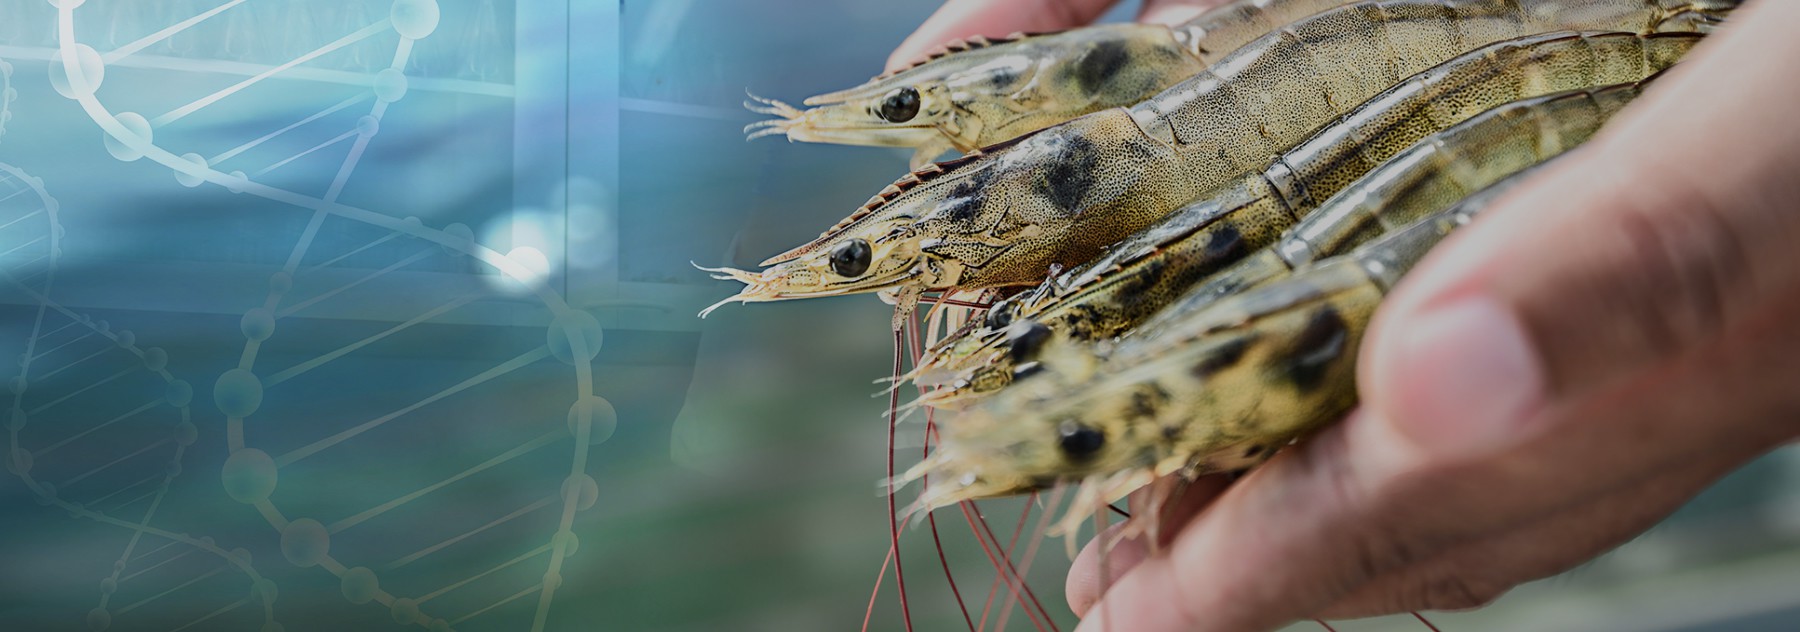 API plans to supply 10000 shrimp broodstock in second quarter